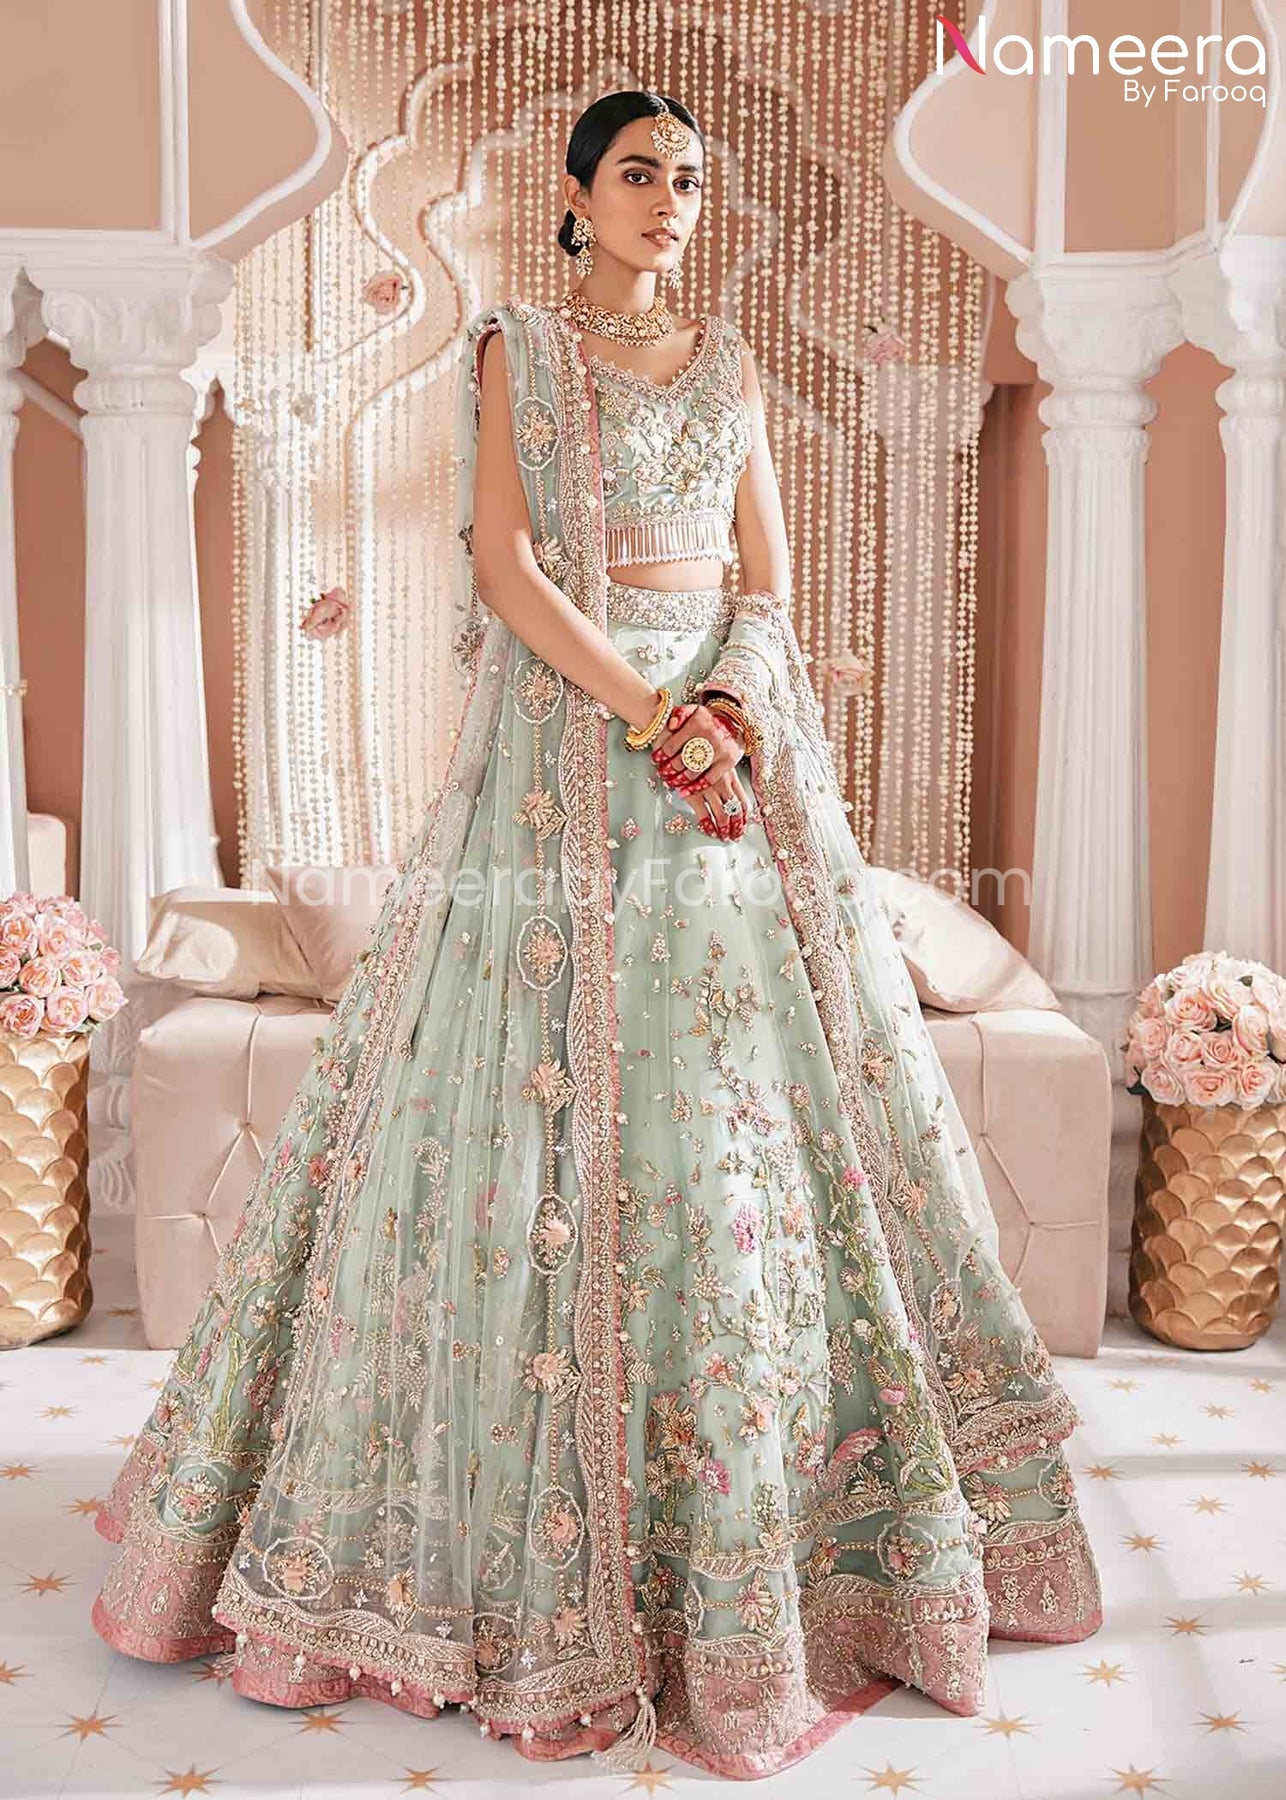 Pakistani Bridal Dress In Choli Lehenga Design Online 2021 Nameera By Farooq 3043